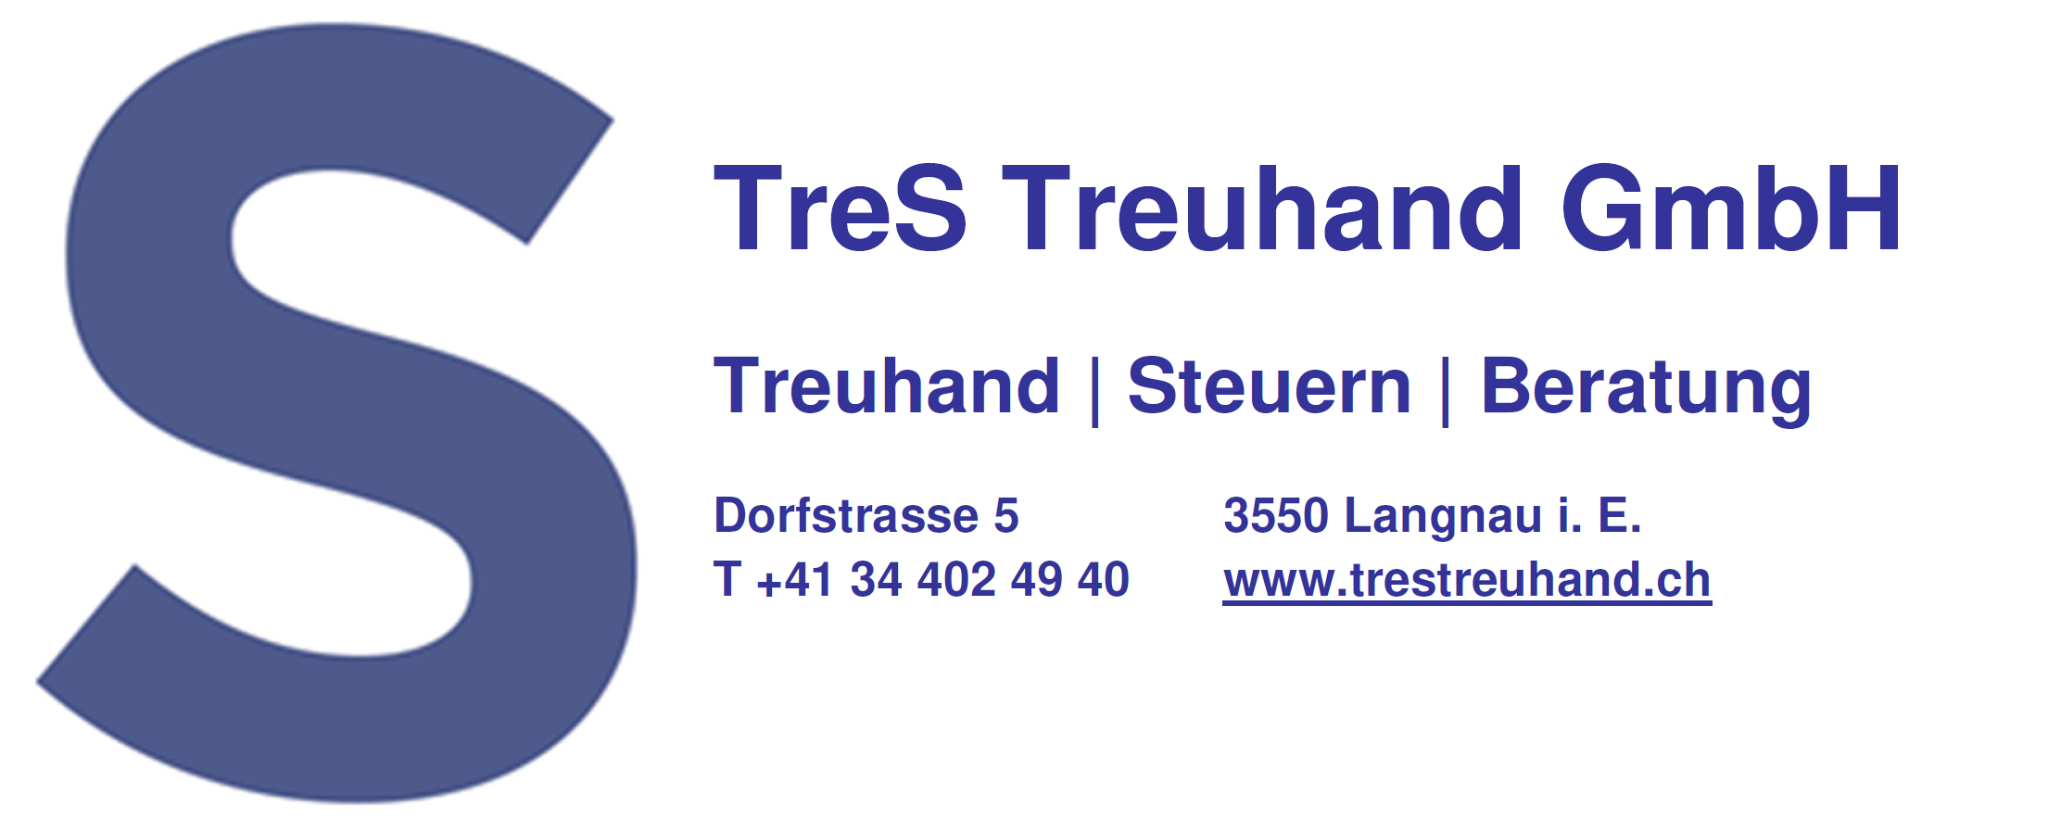 Tres Treuhand GmbH